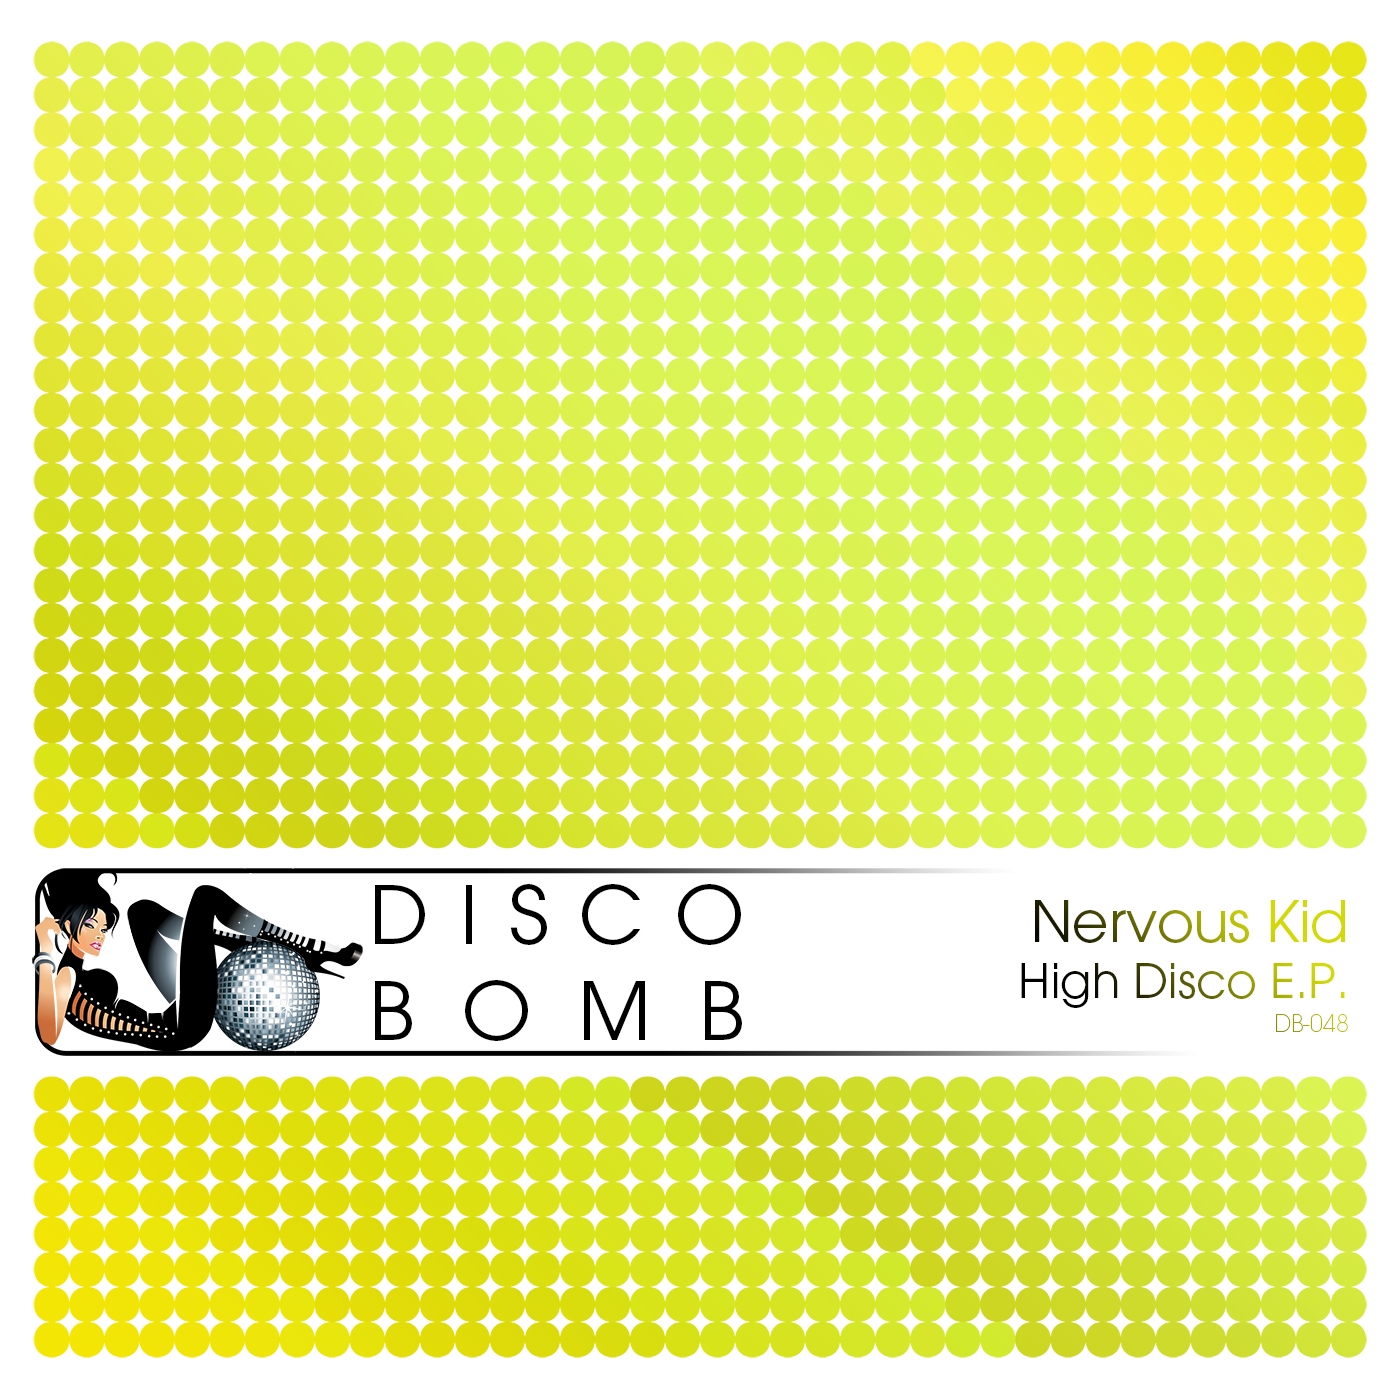 Nervous Kid-High Disco E.P.